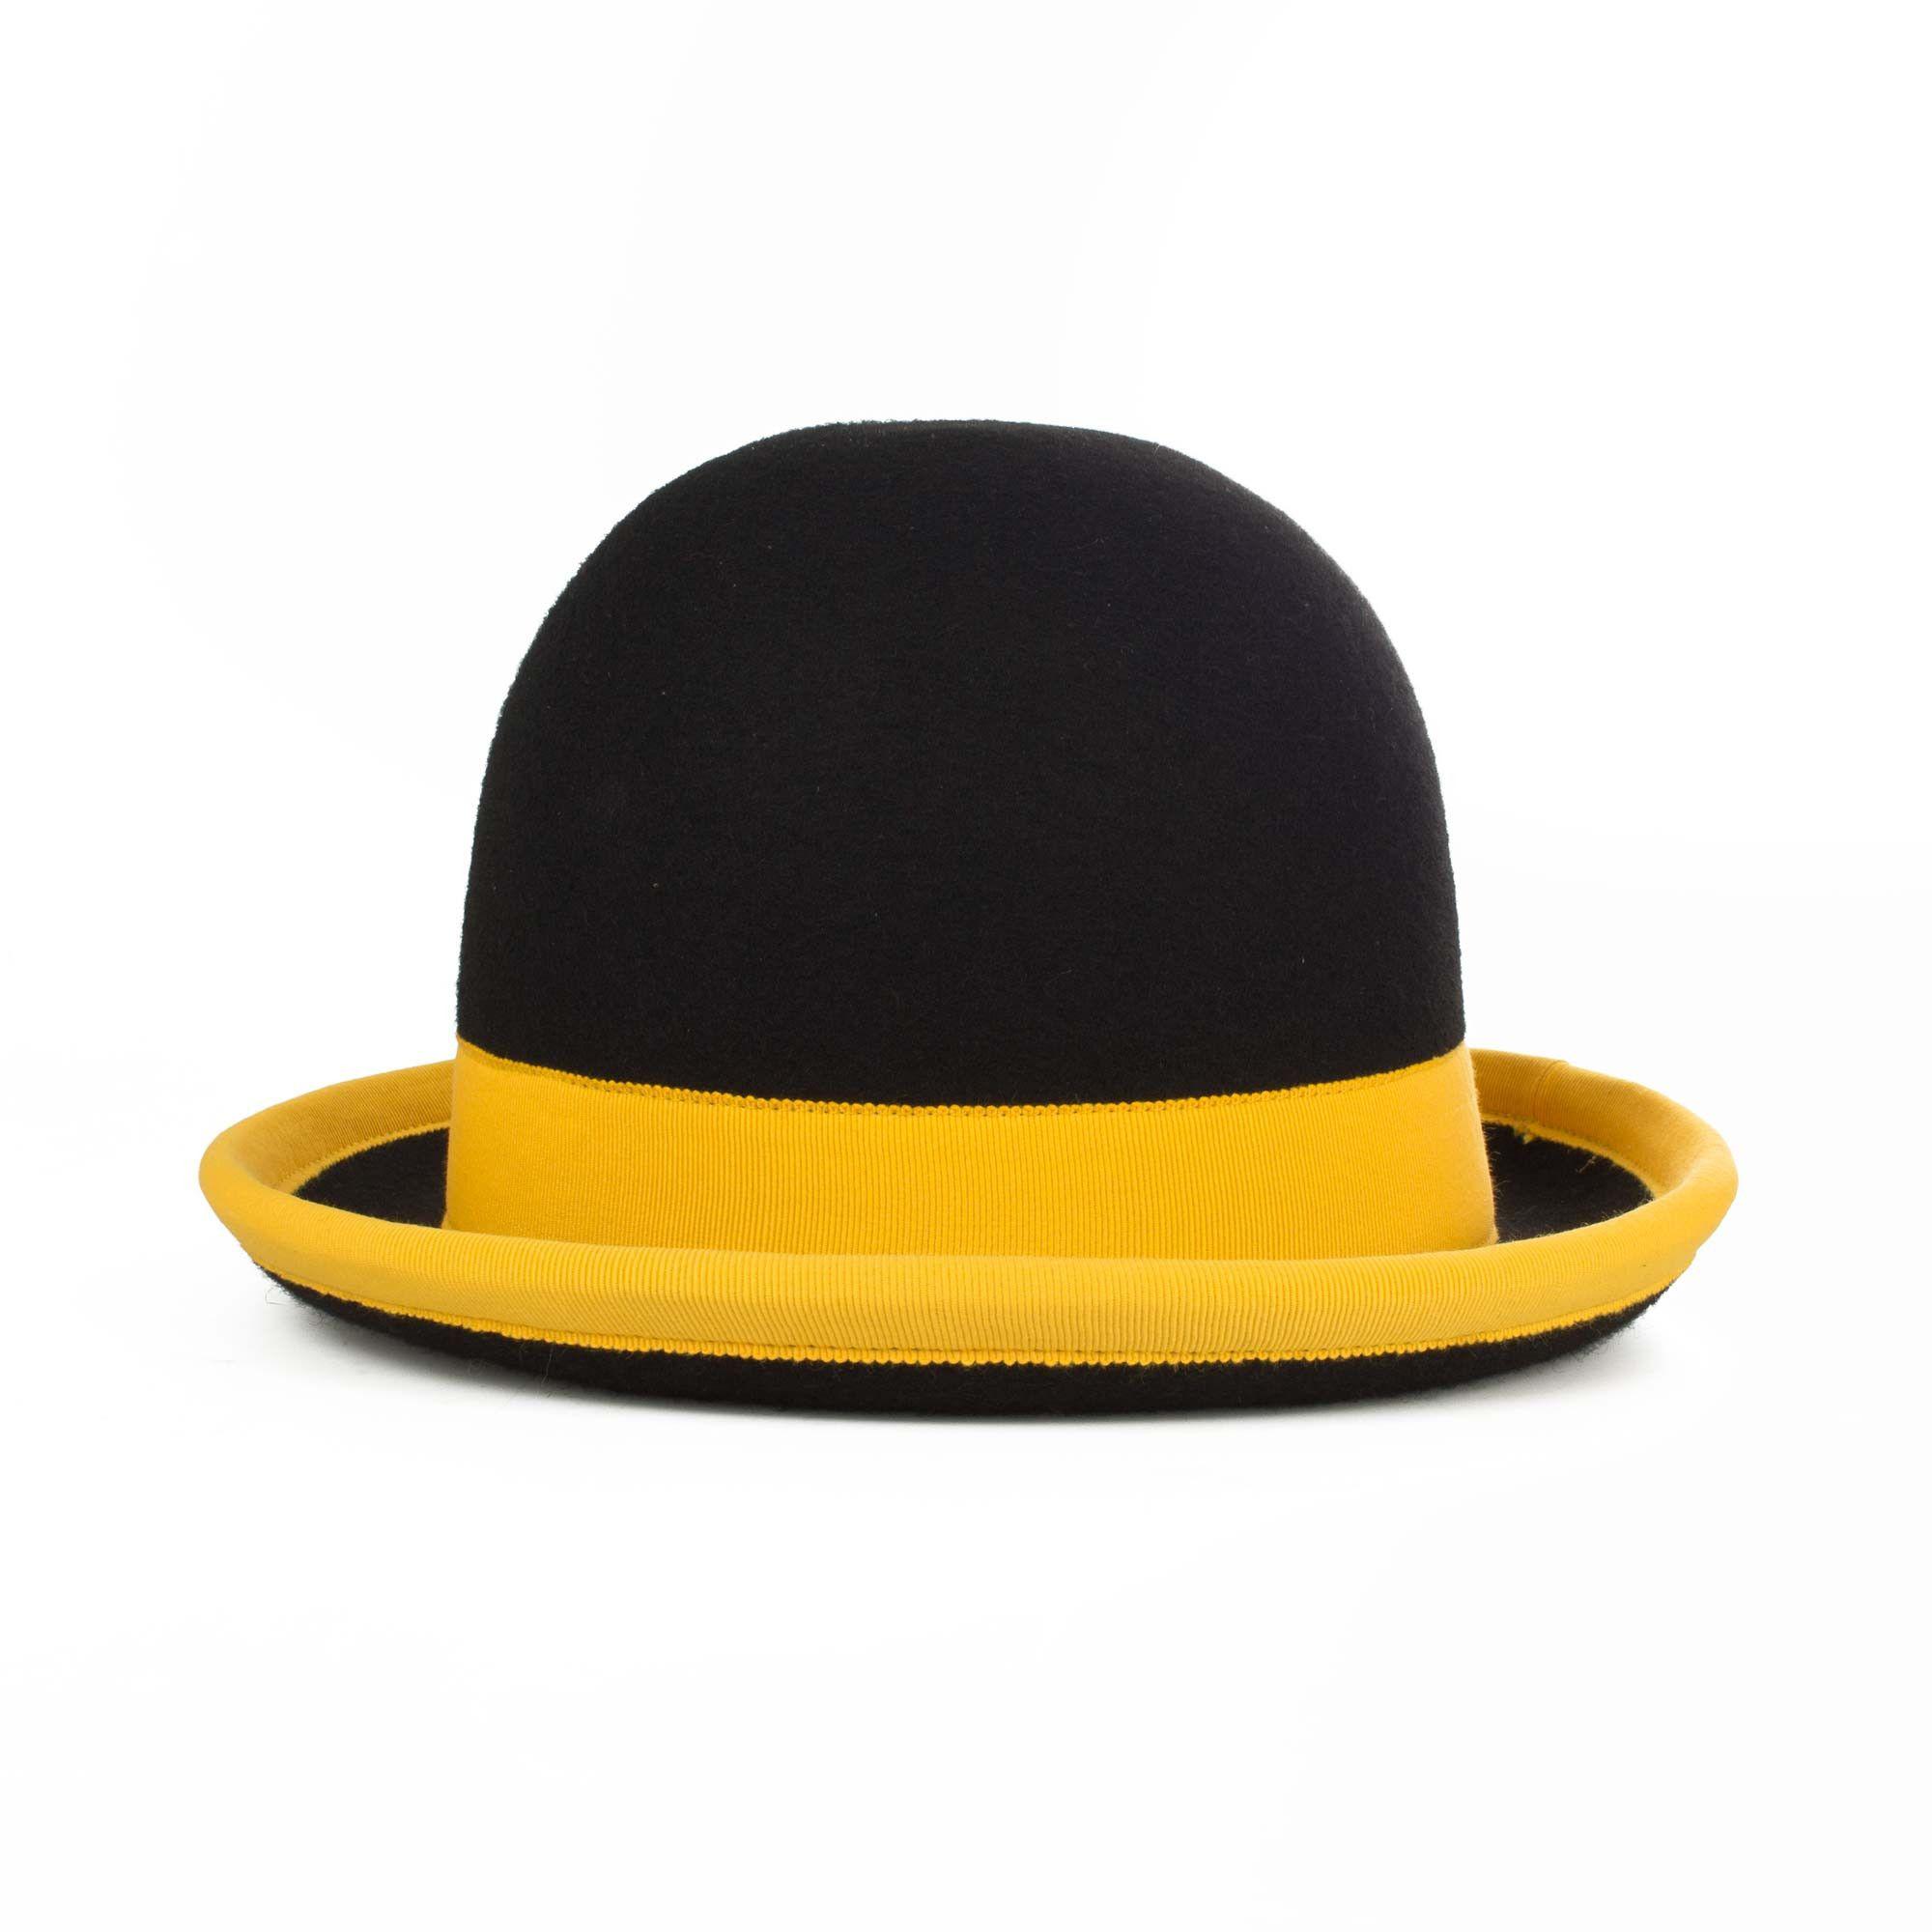 Round Black and Yellow Logo - Nils Poll Round Manipulator Hats - Black/Yellow/Black.